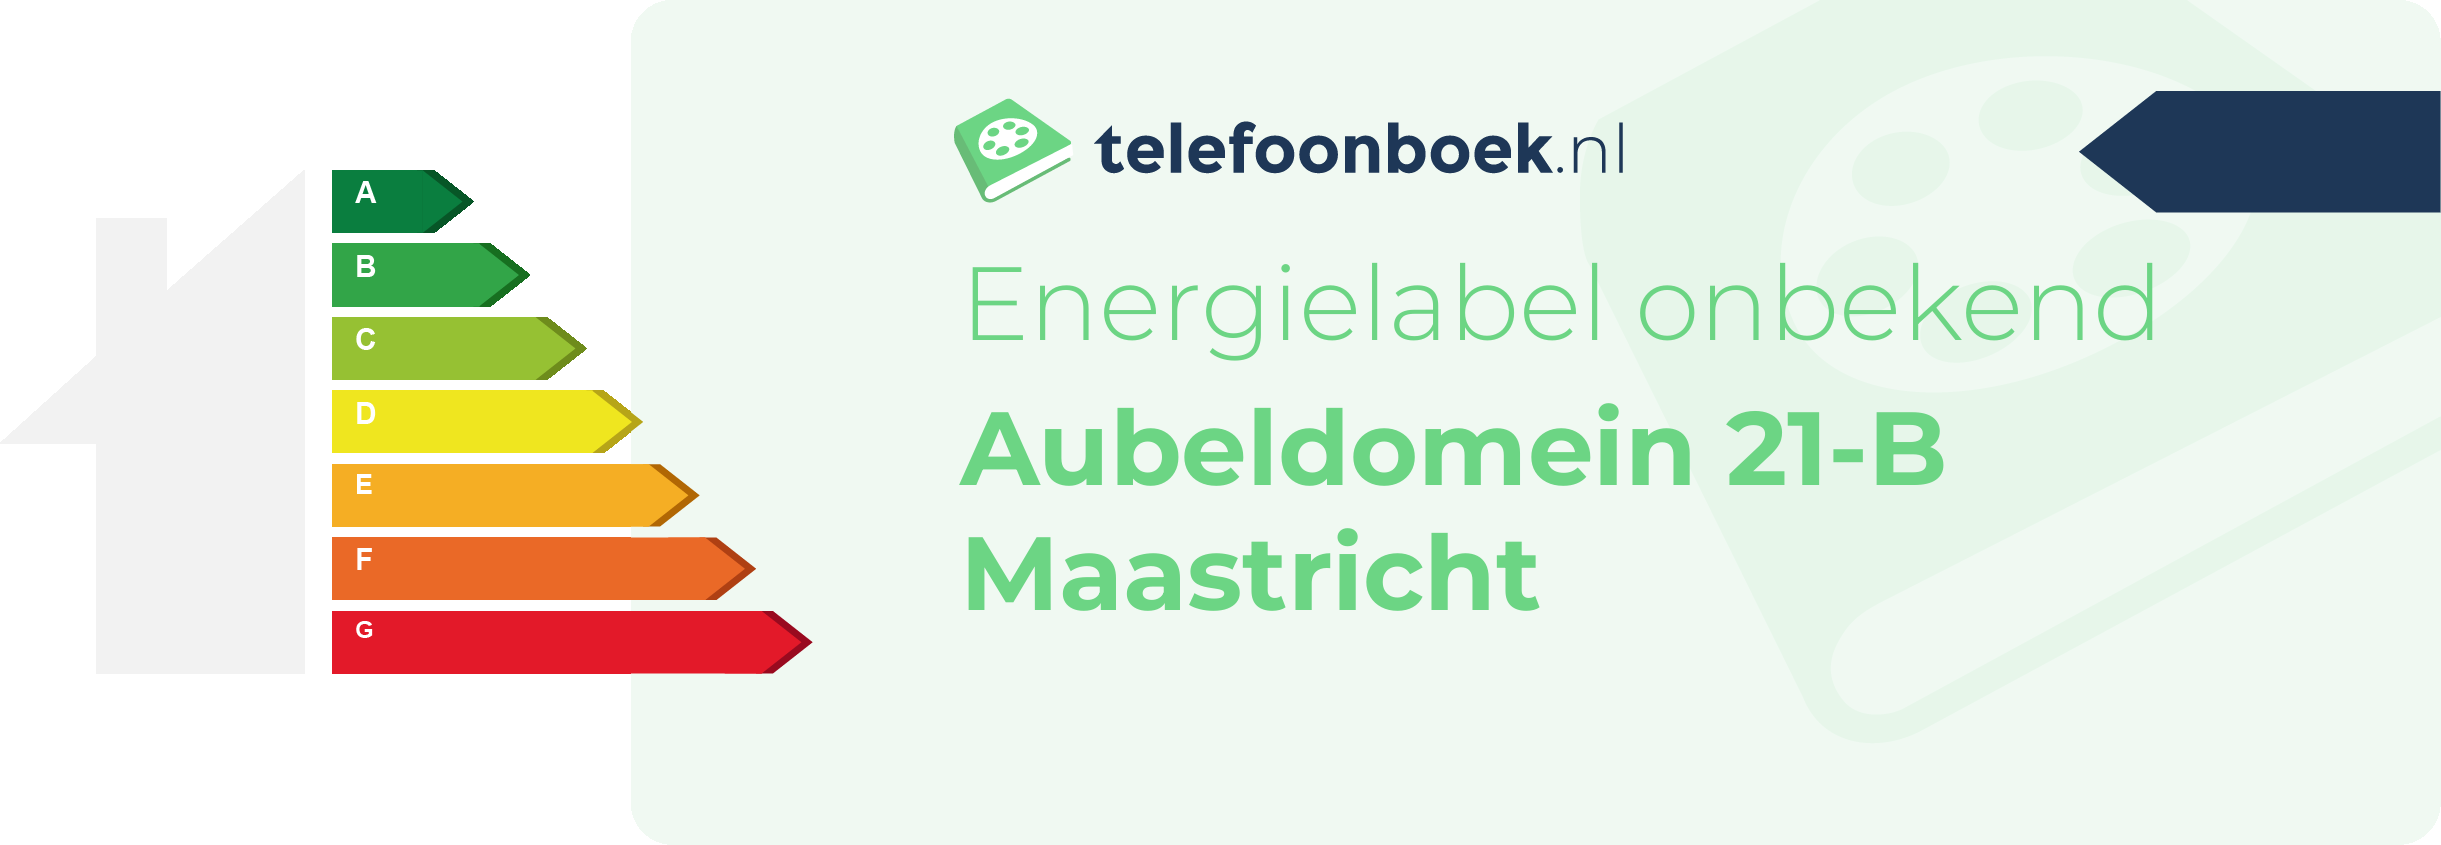 Energielabel Aubeldomein 21-B Maastricht